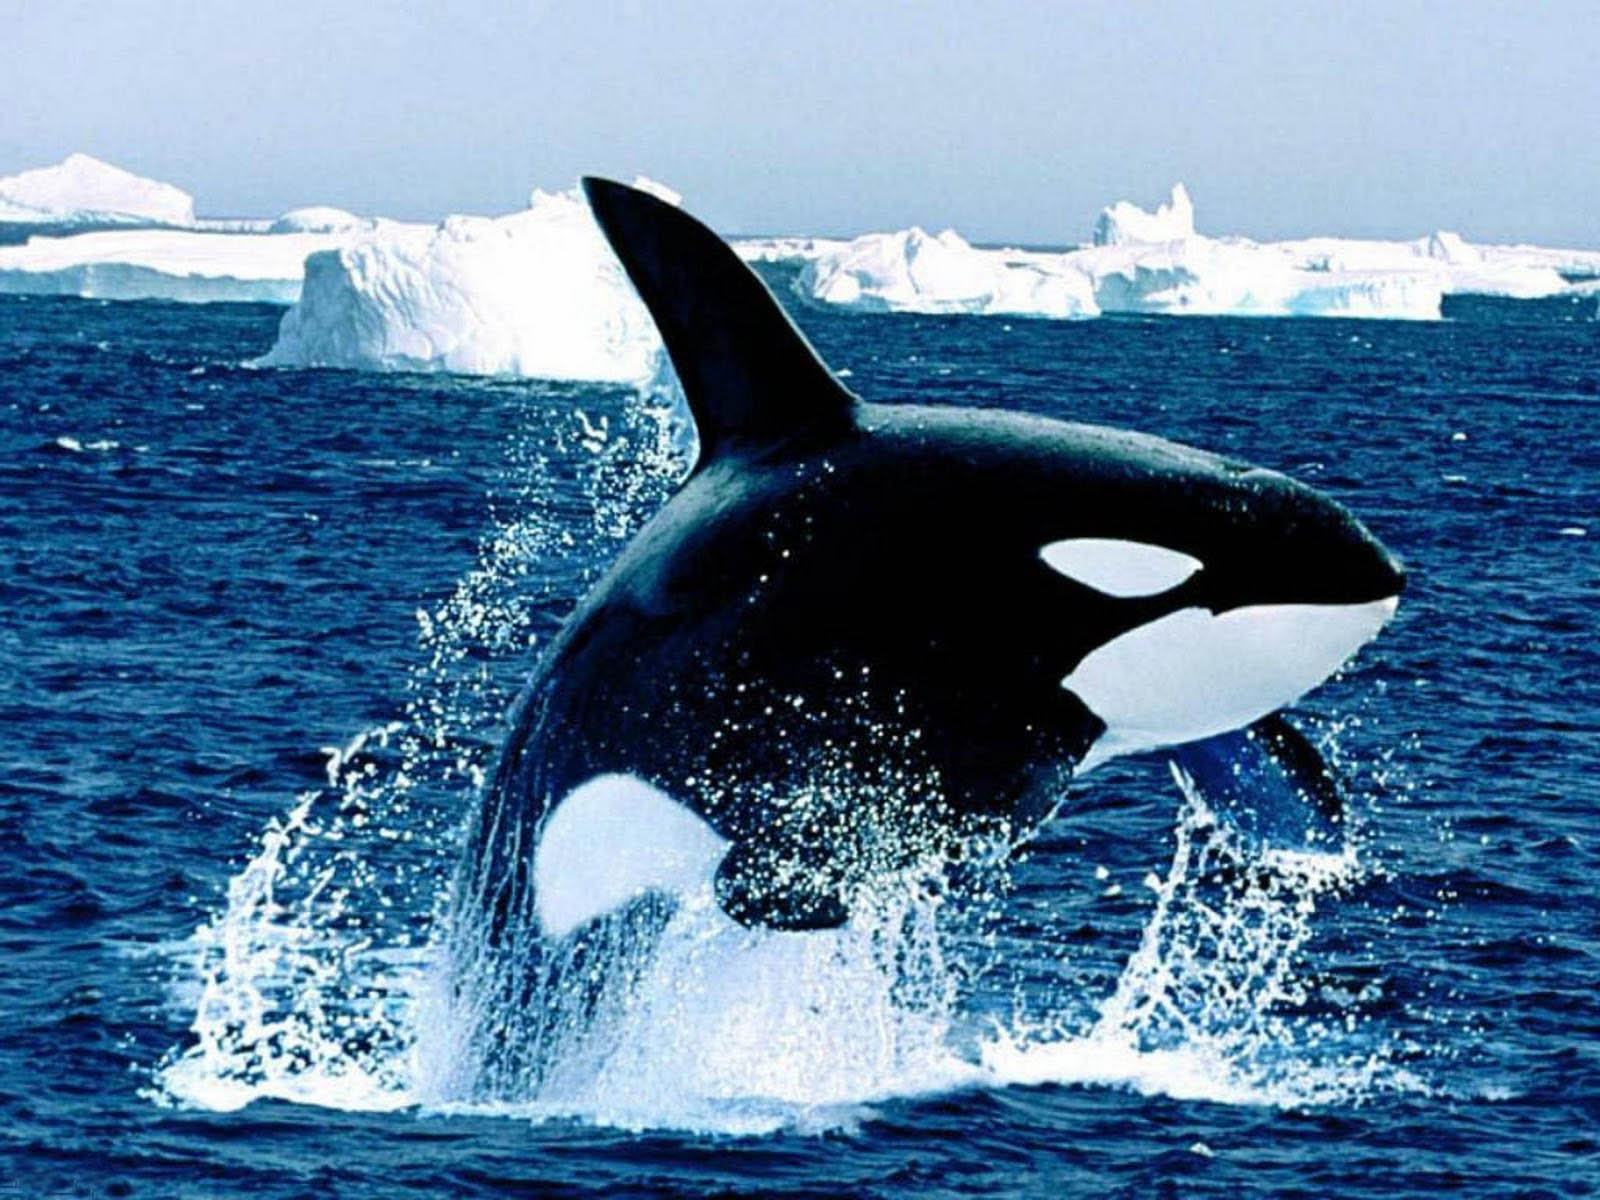 fond d'écran orca,orque,mammifère marin,biologie marine,baleine,dauphin